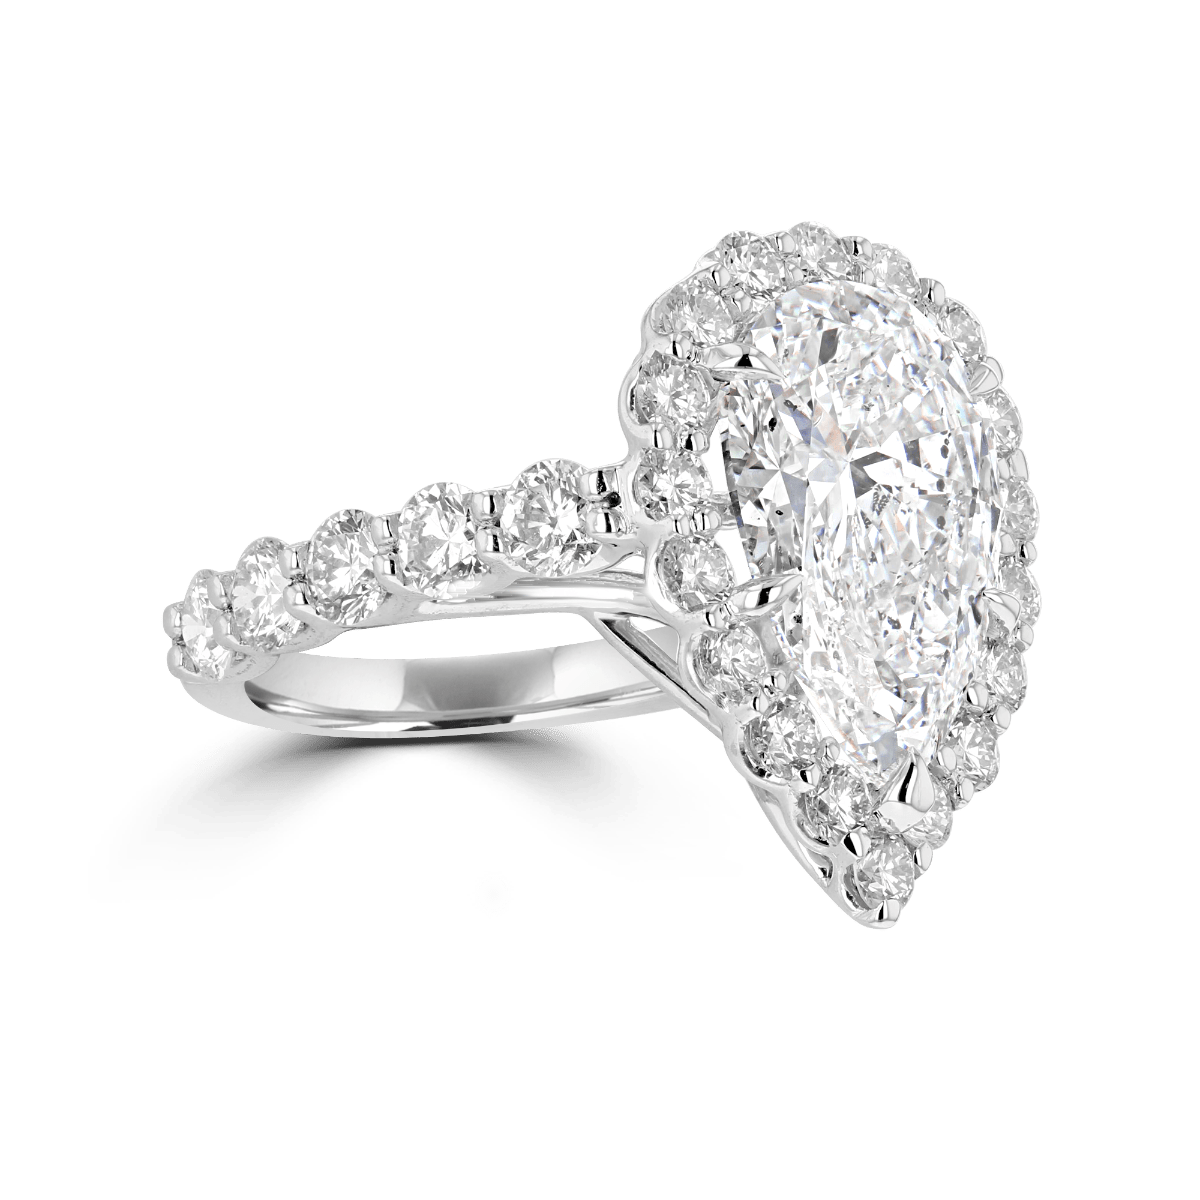 Platinum 7.82 CTW Diamond Pear Shape Halo Ring 4,4.5,5,5.5,6,6.5,7,7.5,8,8.5,9